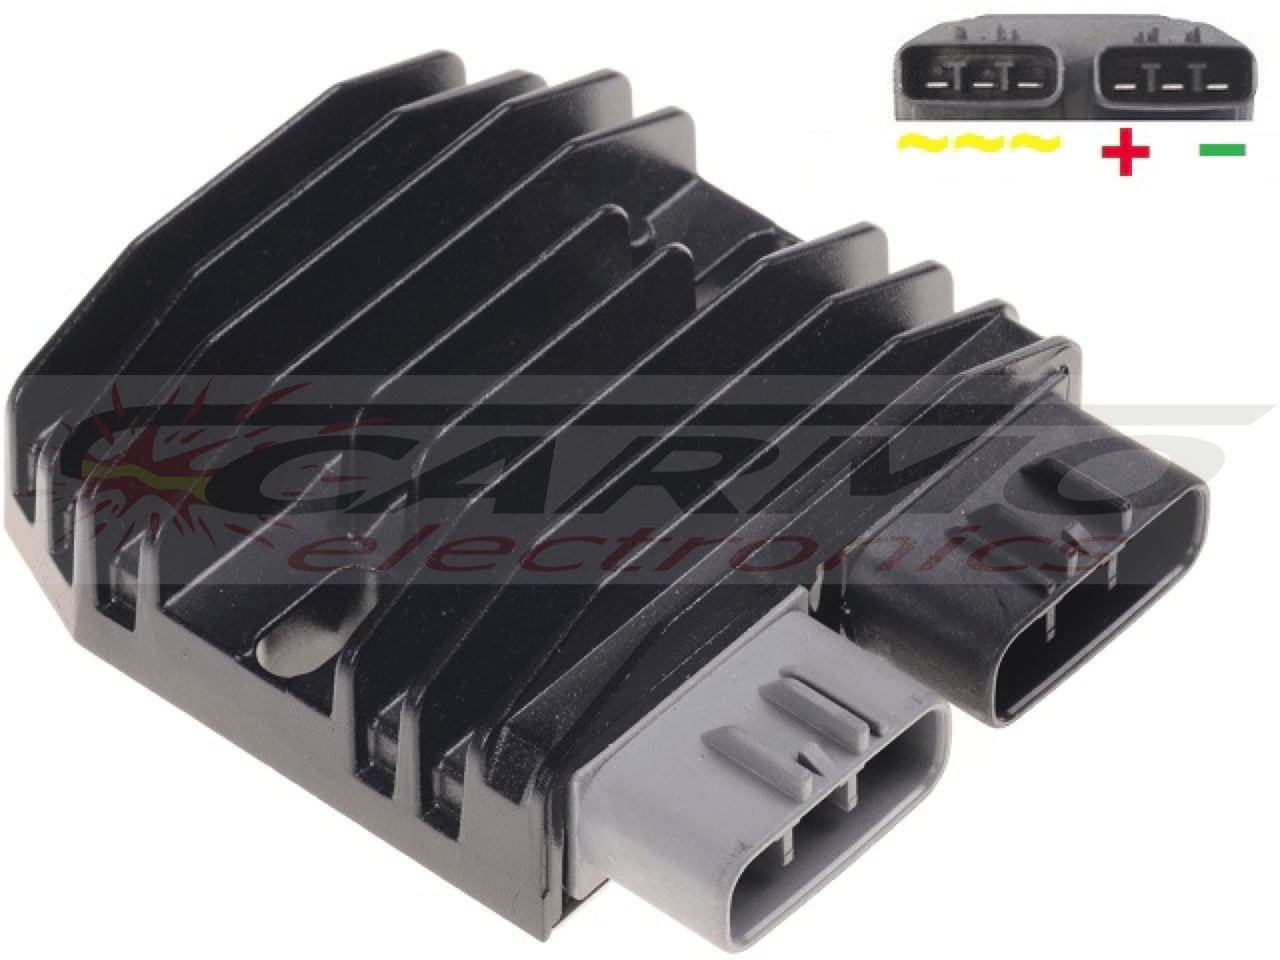 CARR5925 Honda Kawasaki Polaris MOSFET Voltage regulator rectifier - Clique na Imagem para Fechar